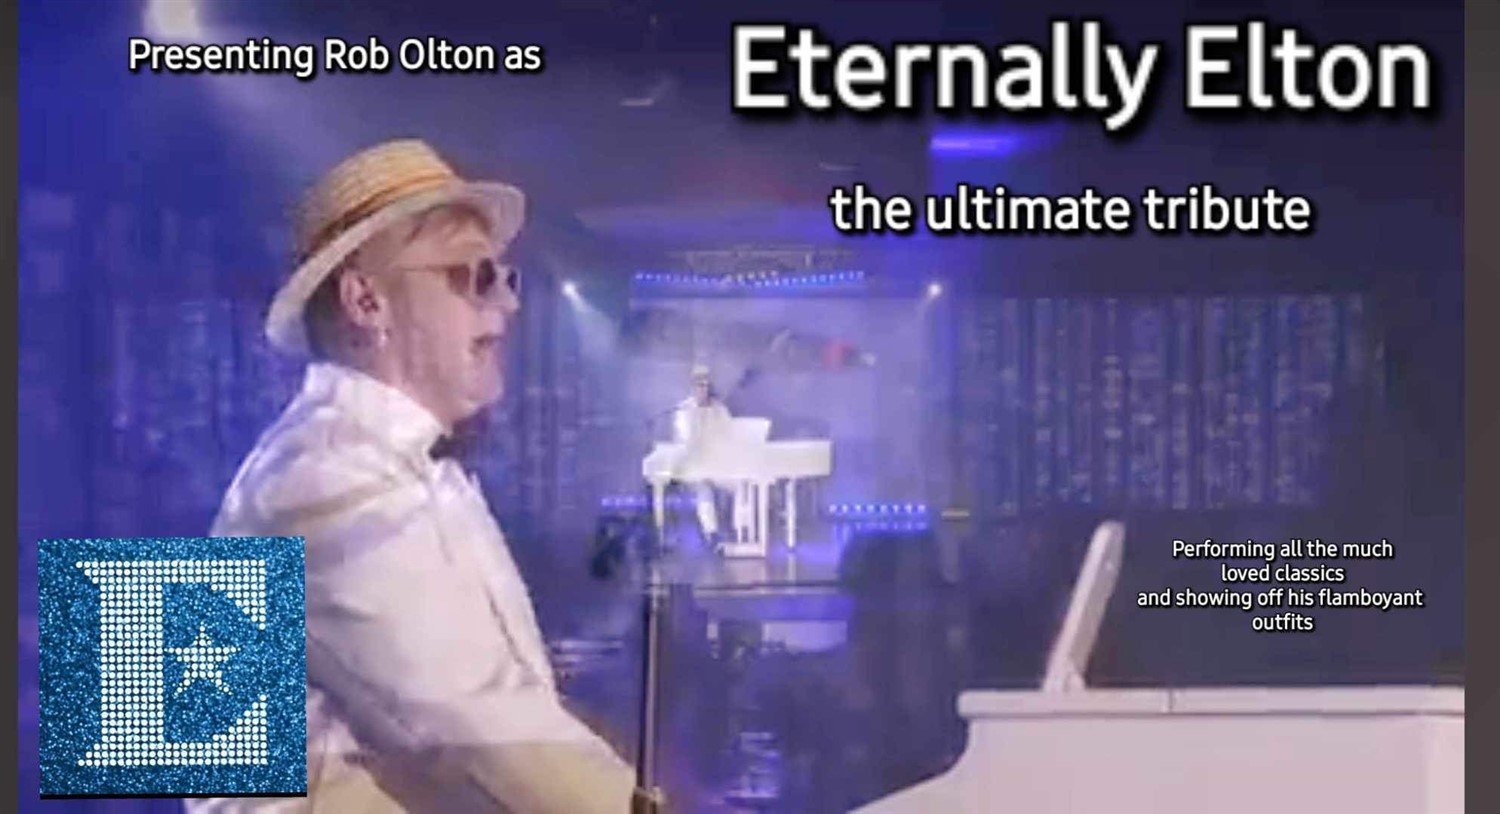 Elton John Tribute  on oct. 26, 19:30@March United Services Club - Compra entradas y obtén información enwhittlesey music nights 